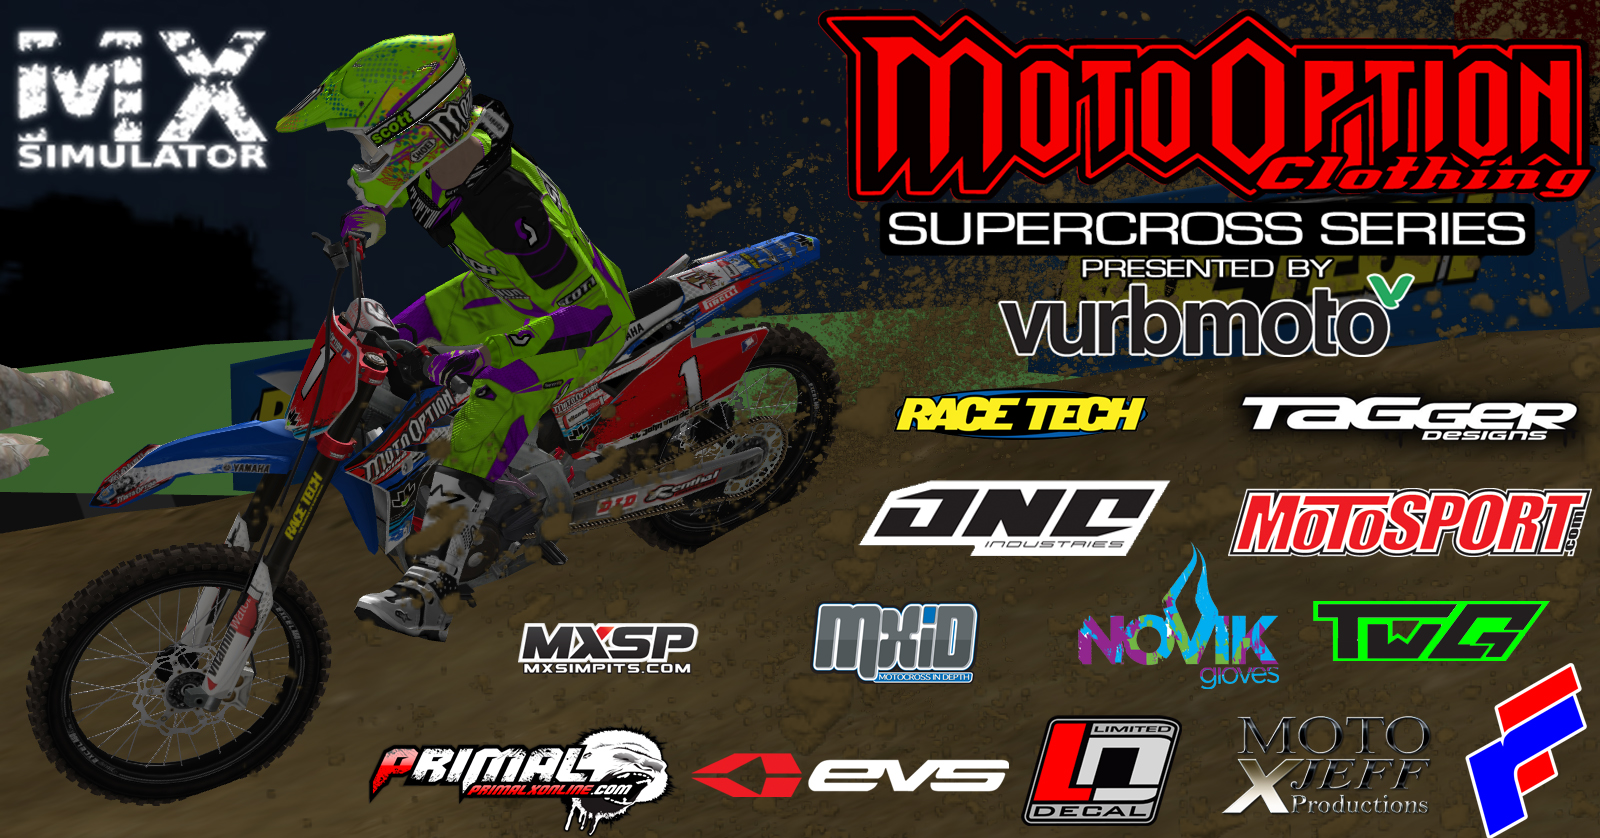 2012 MotoOption Supercross Series presented by VurbMoto